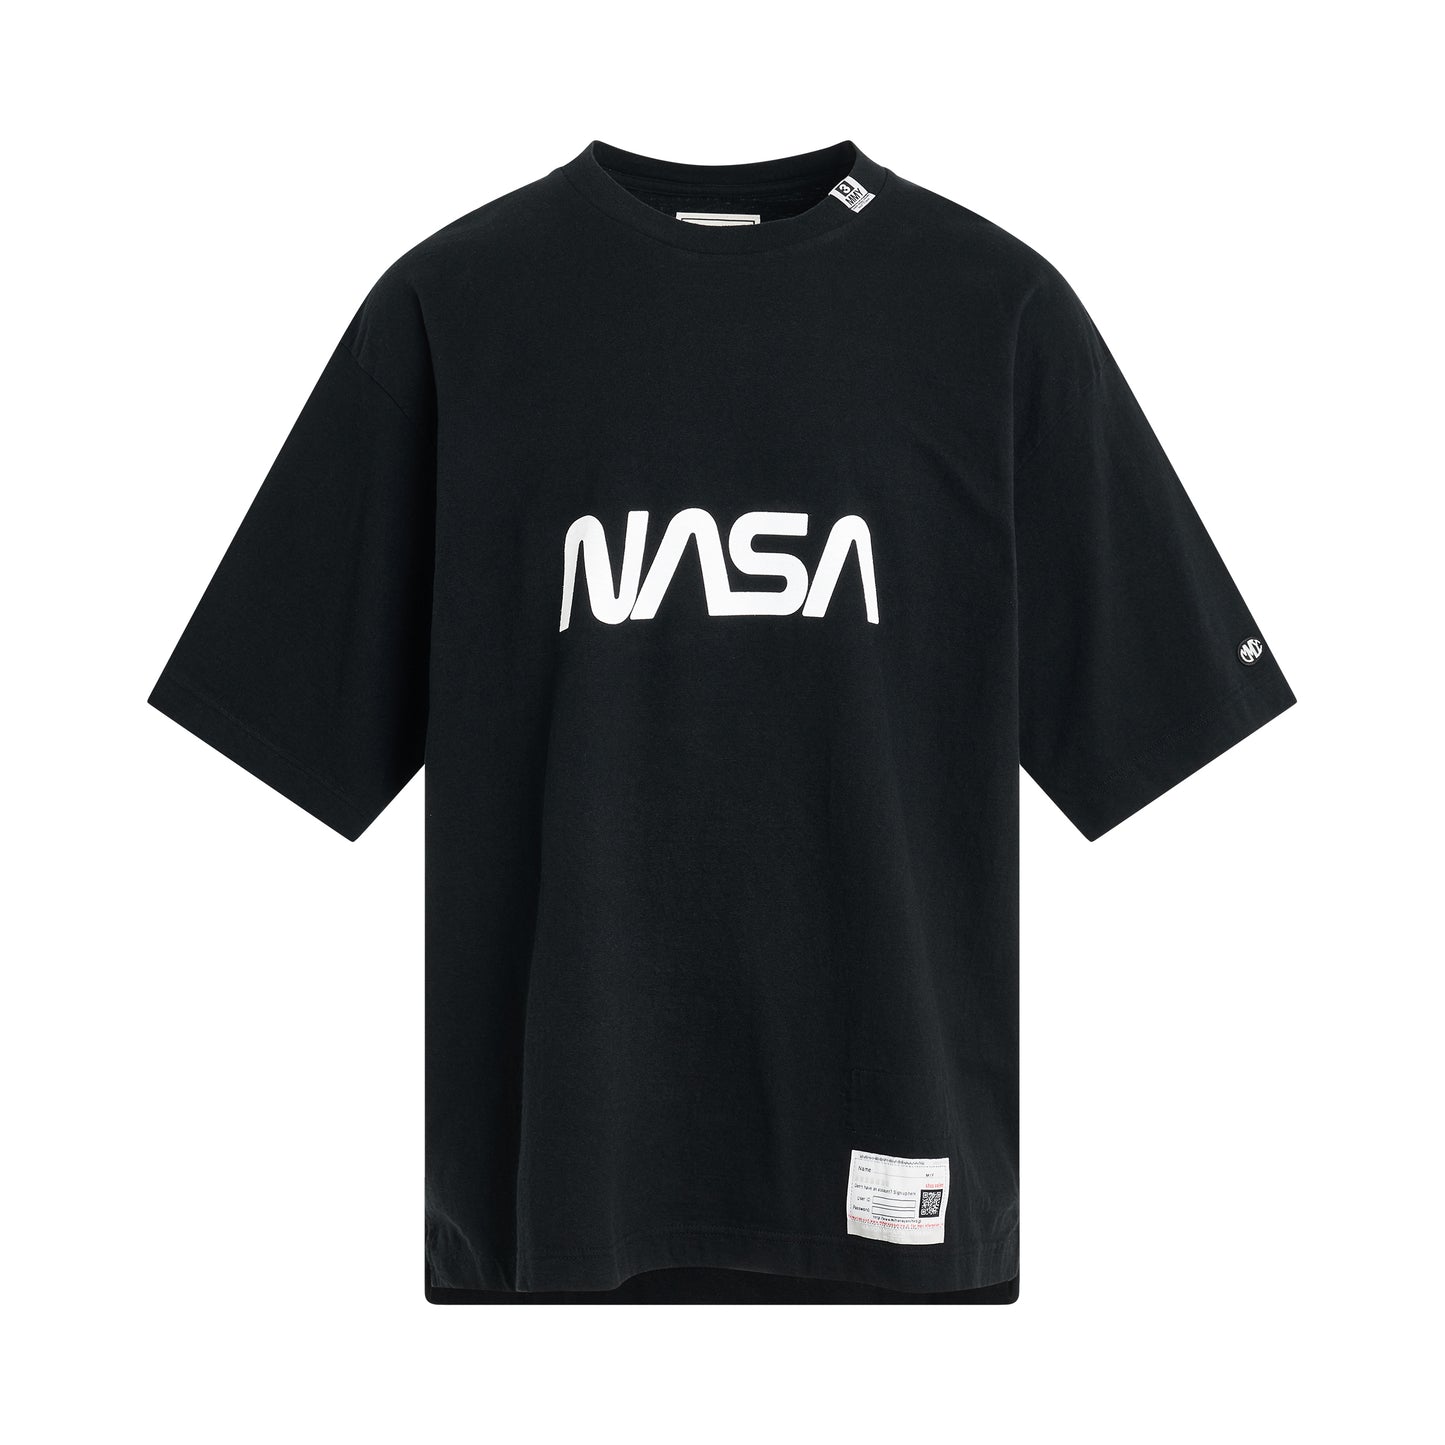 Nasa Printed T-Shirt in Black